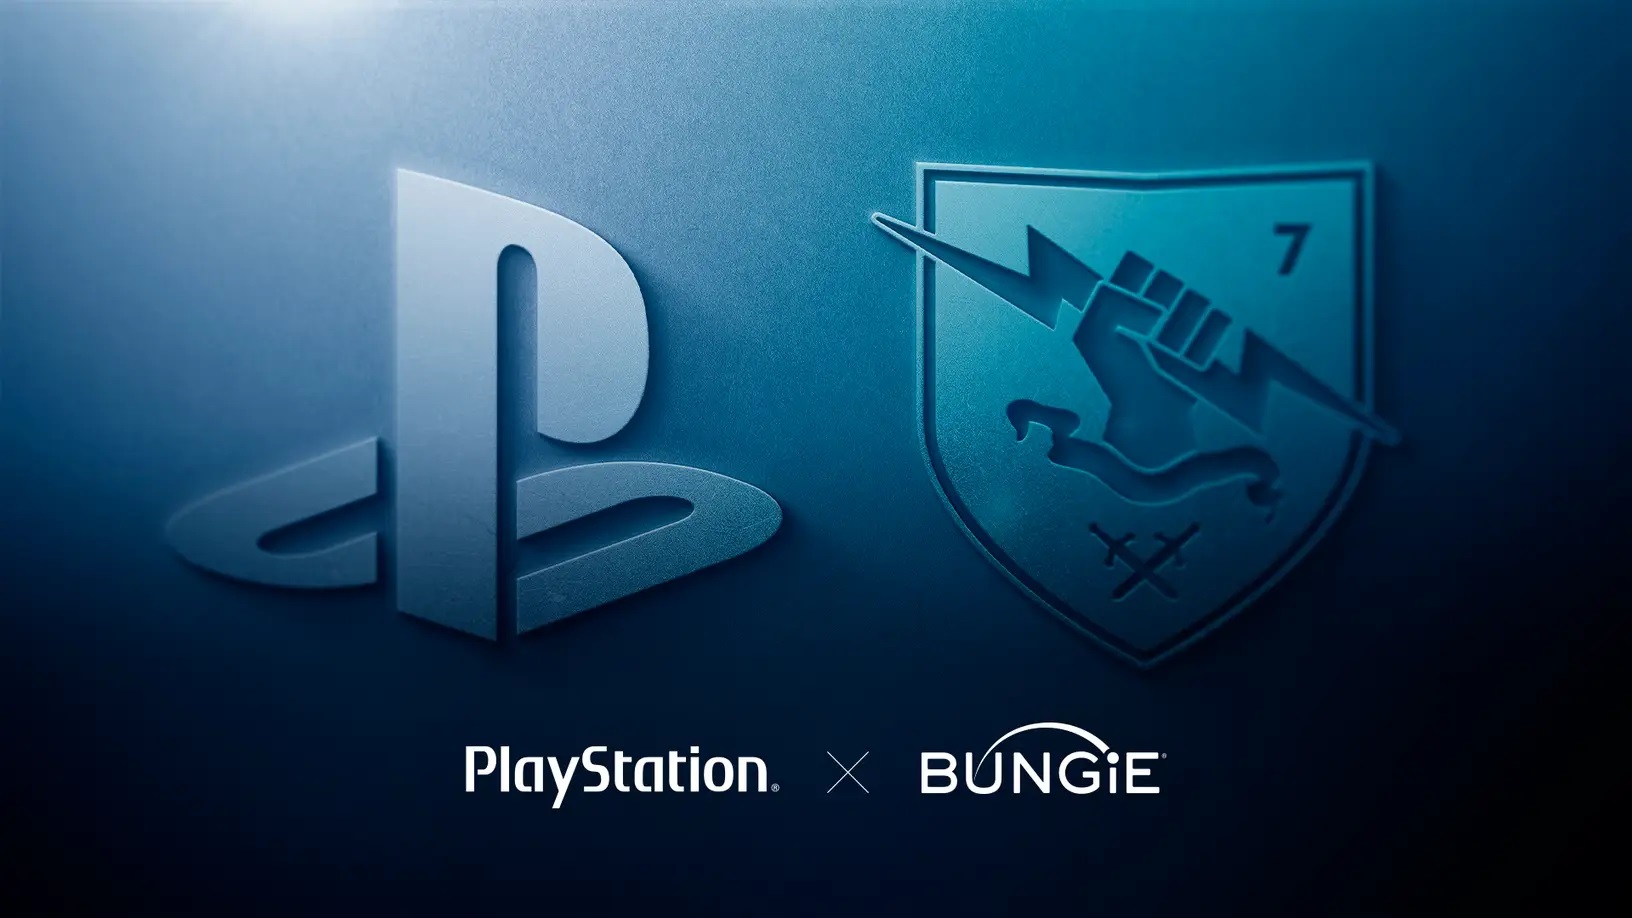 PlayStation เข้าซื้อกิจการ Bungie แล้ว [NEWS]